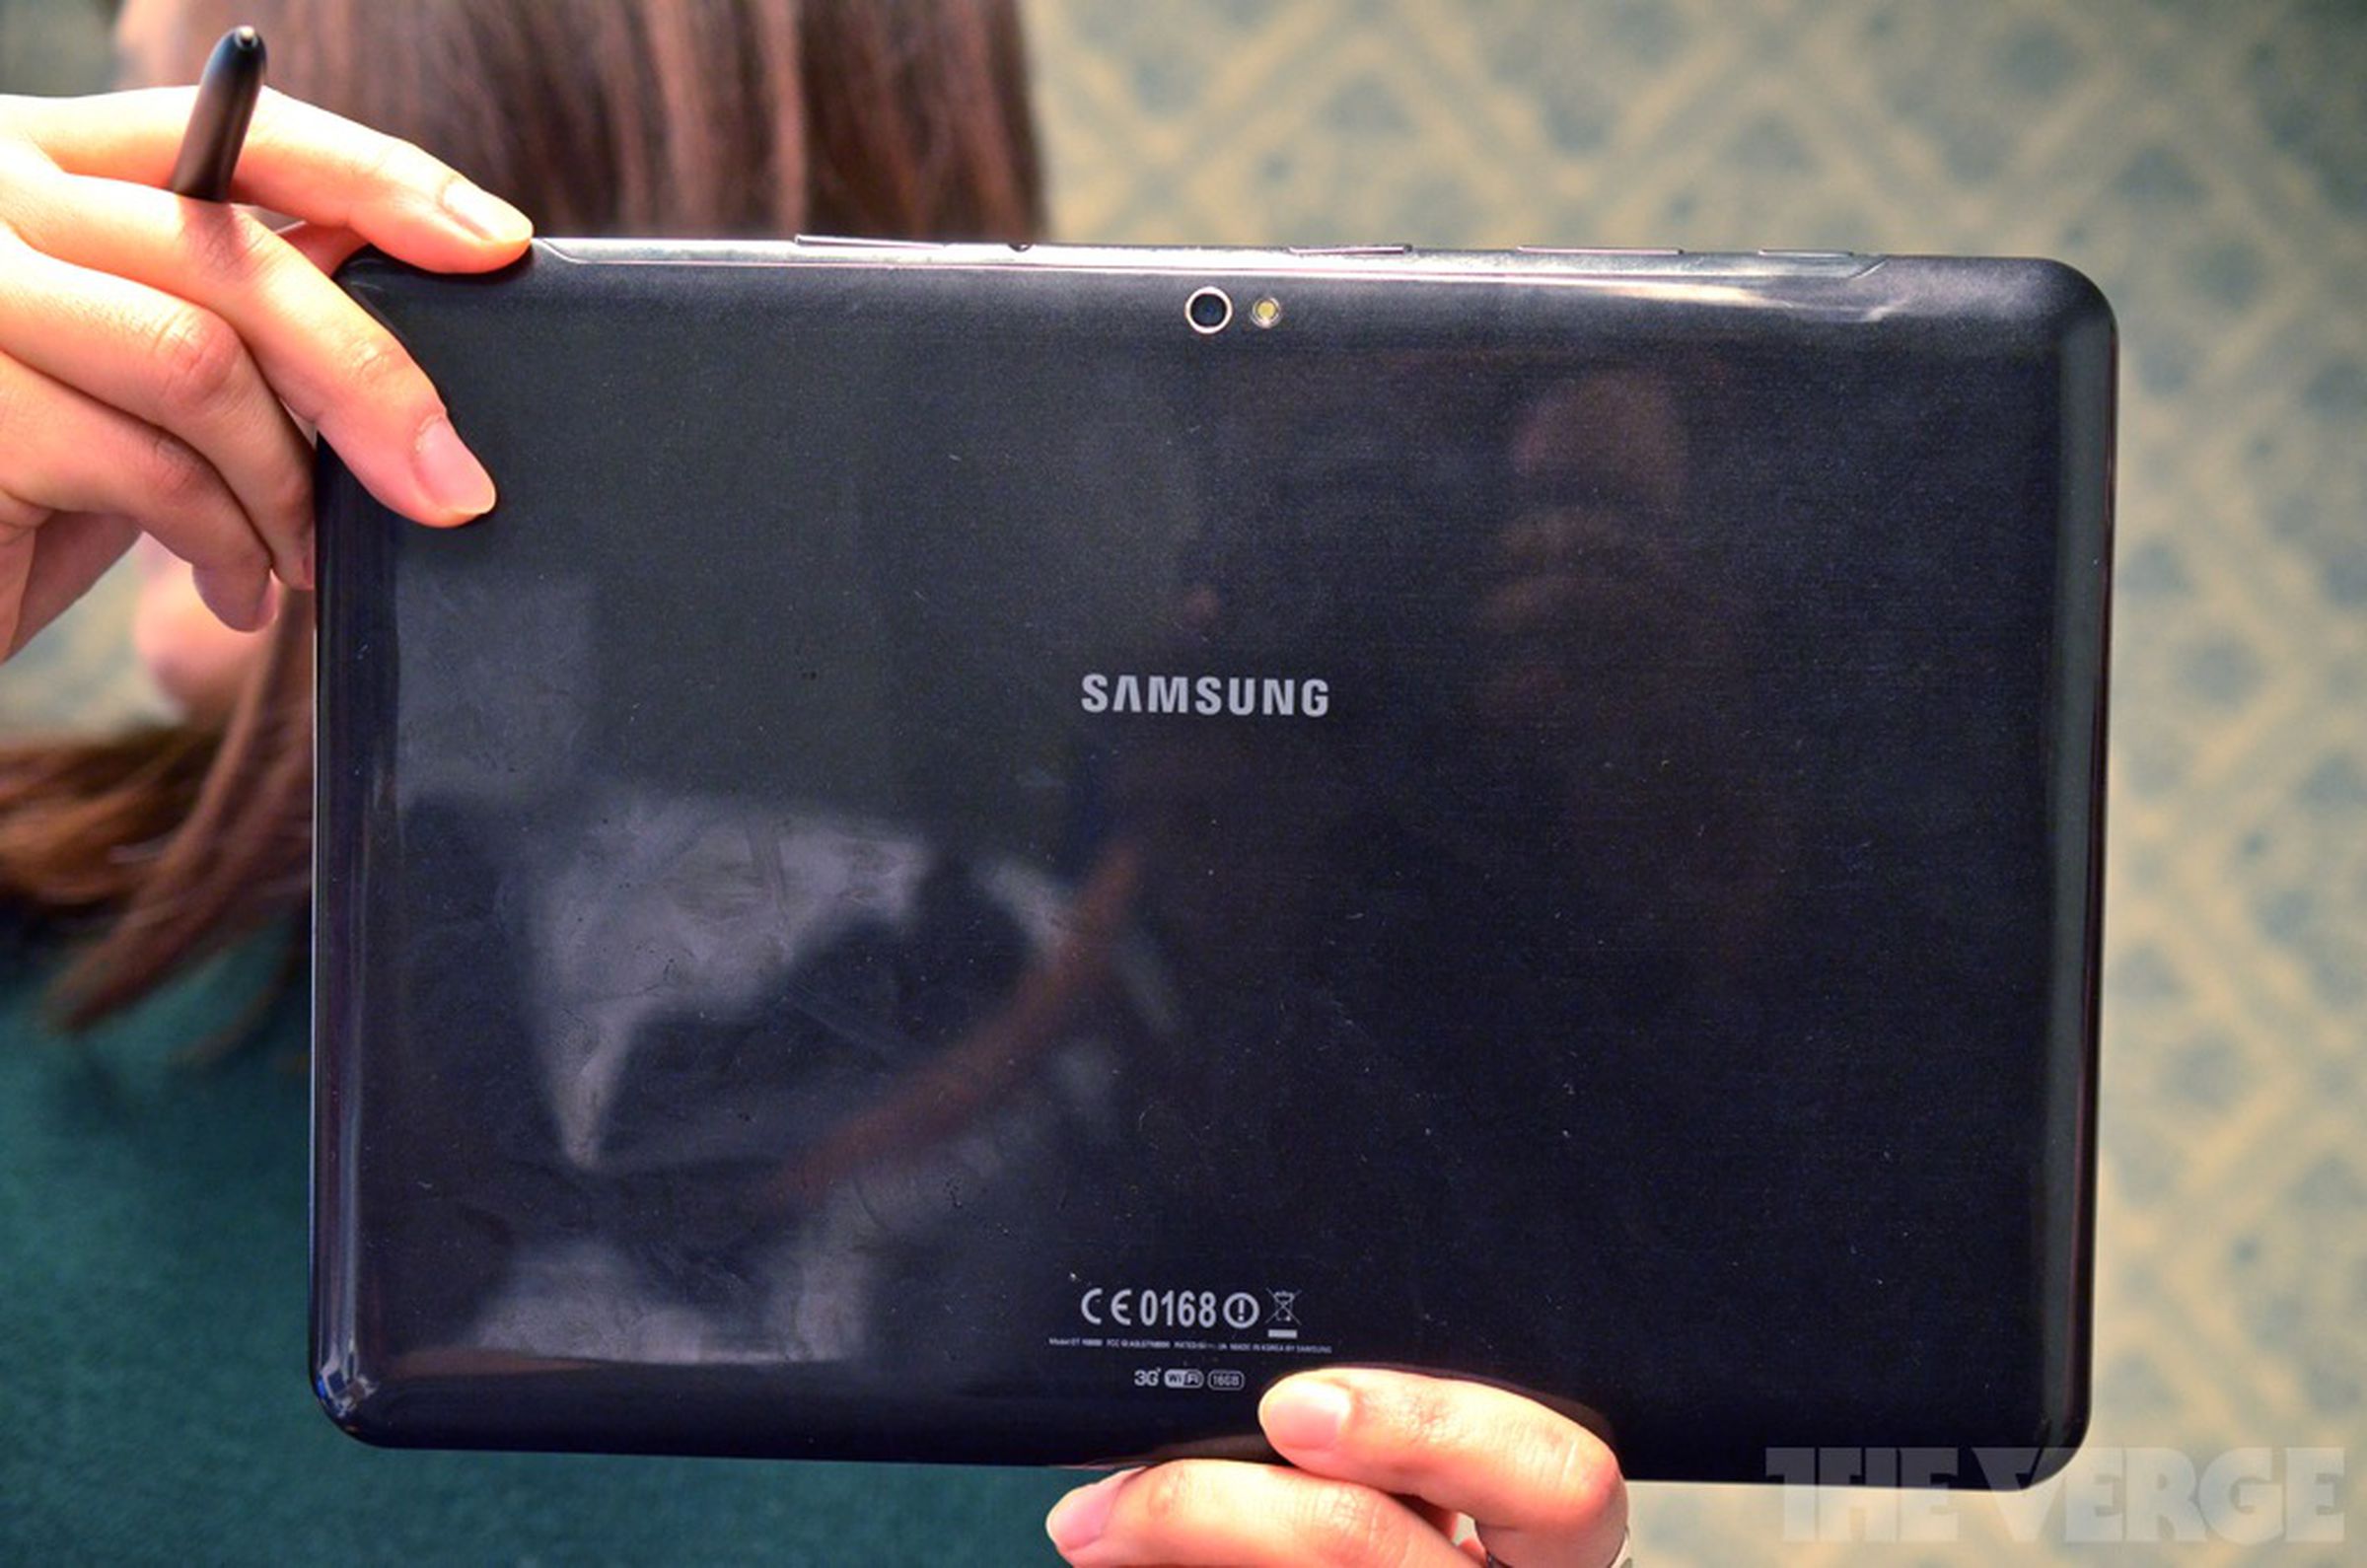 Samsung Galaxy Note 10.1 hands-on